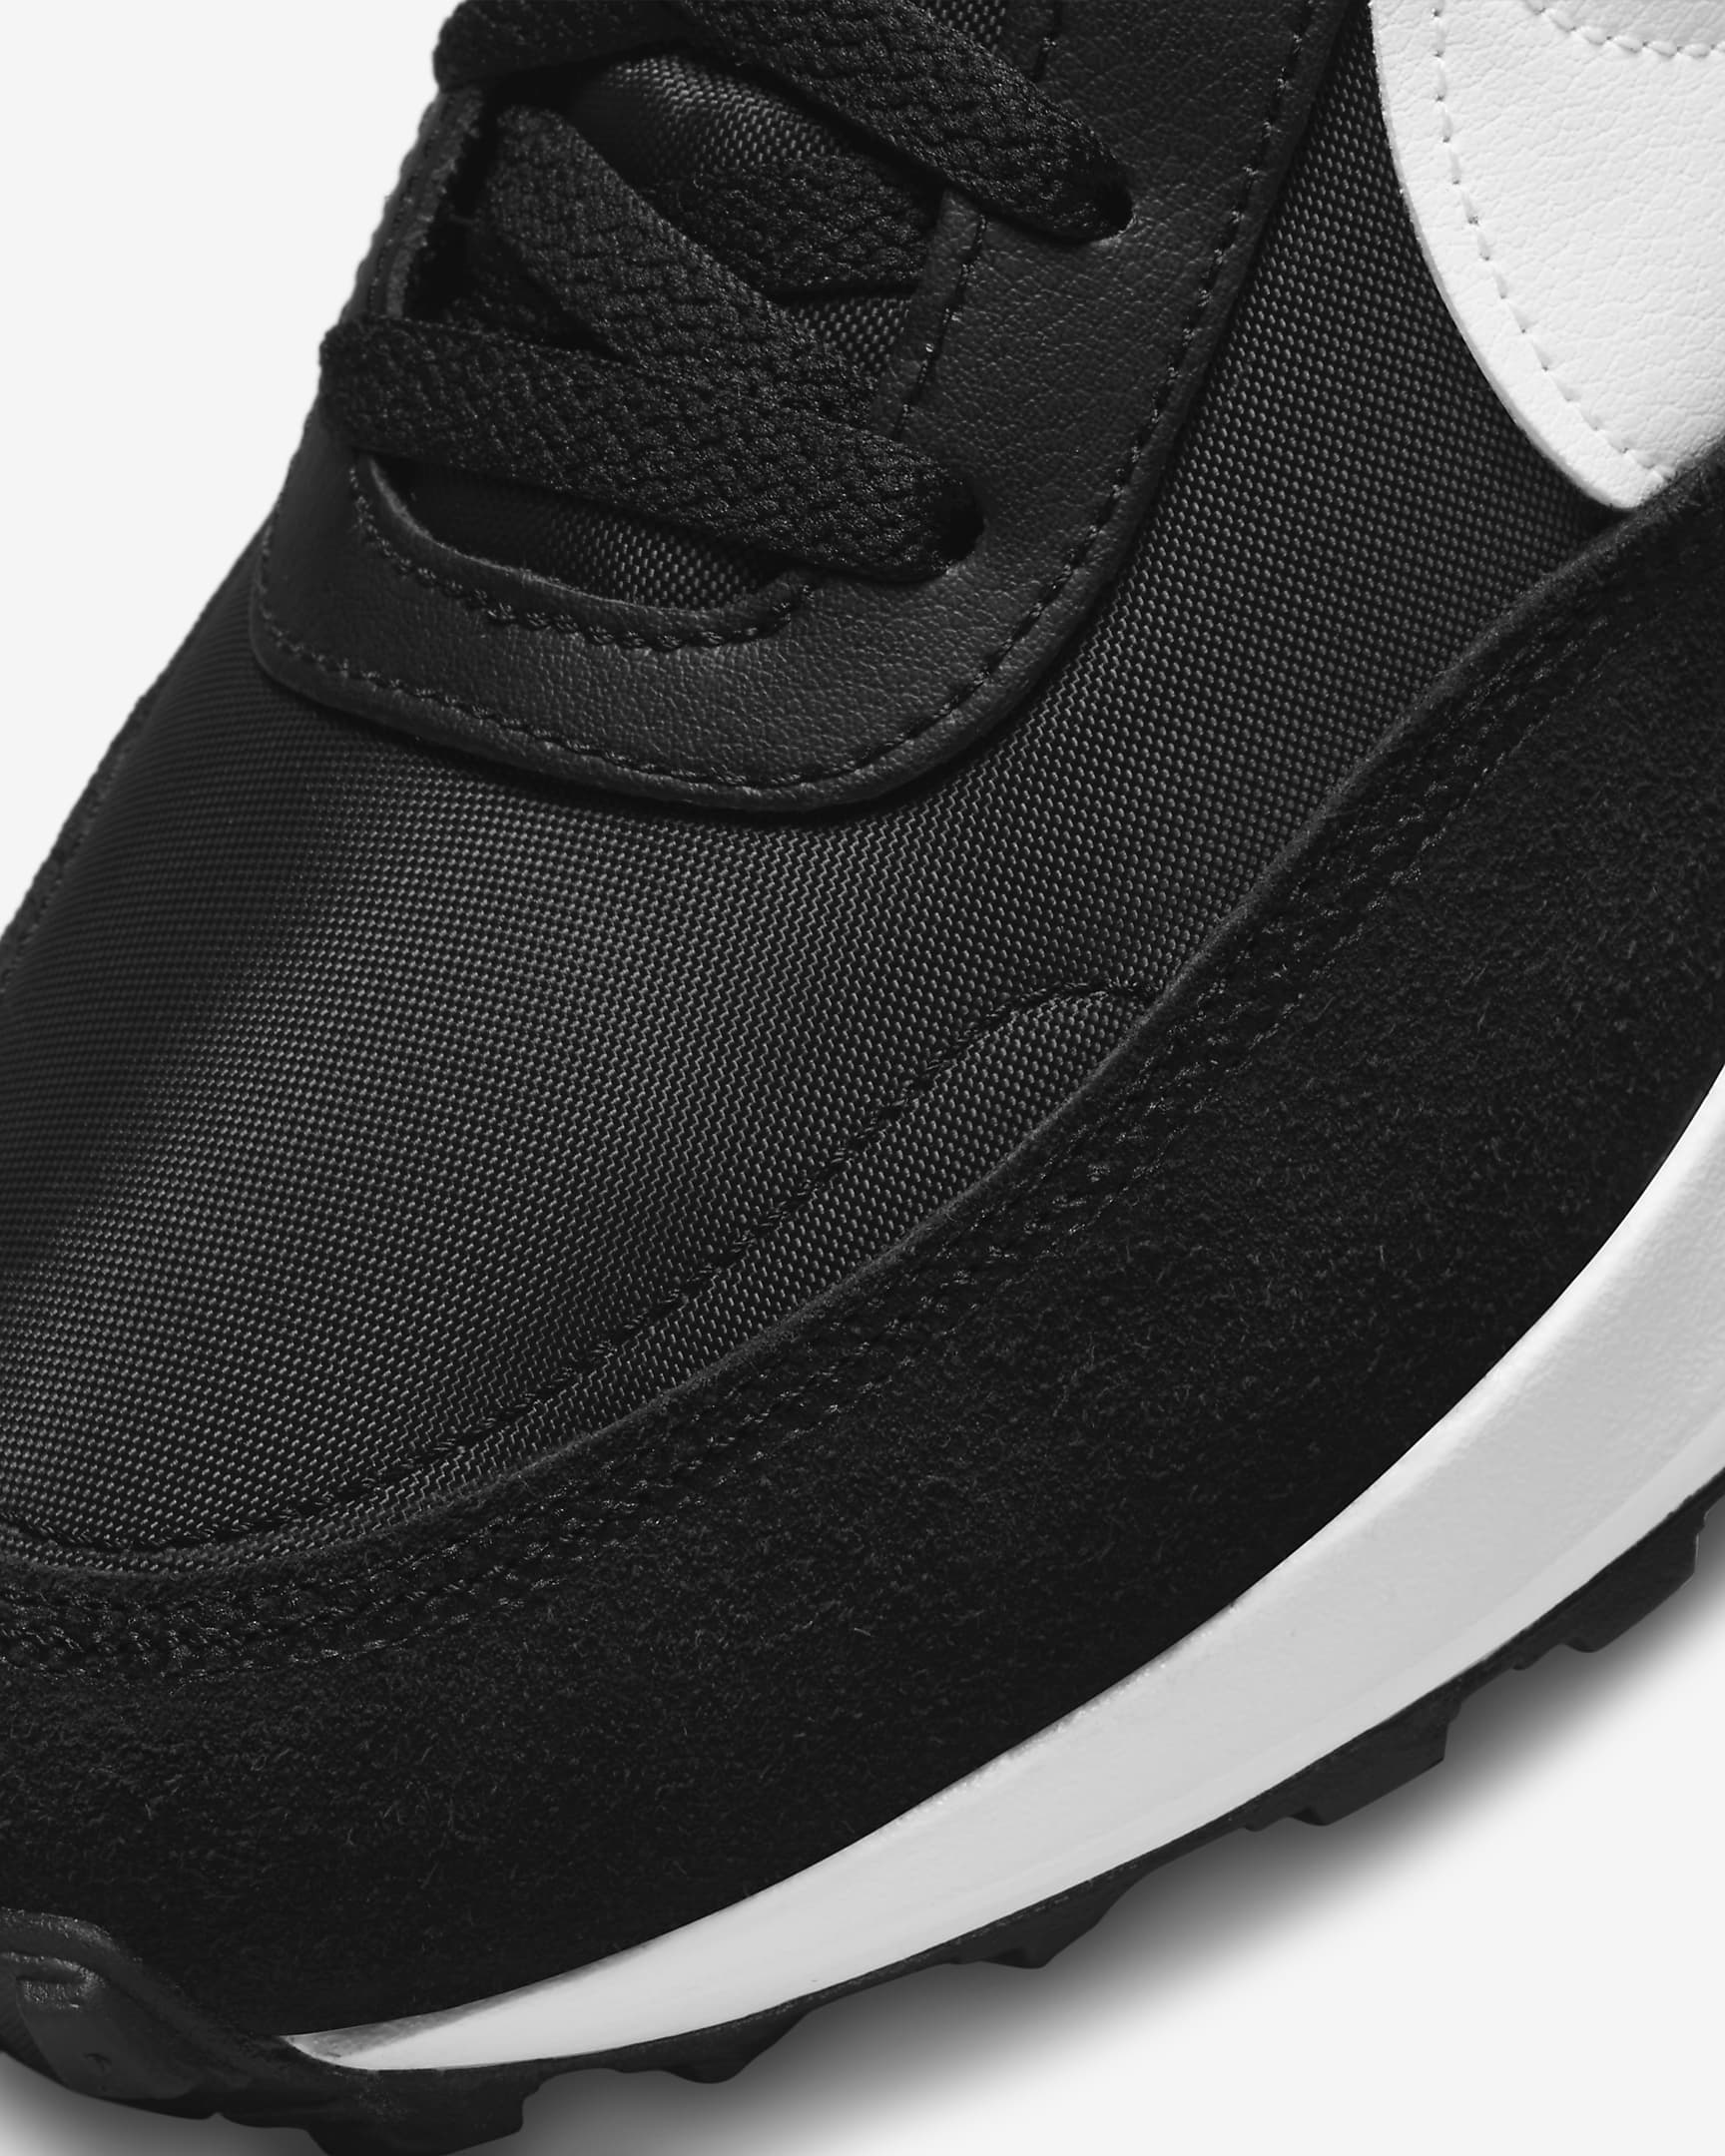 Chaussures Nike Waffle Debut pour Homme - Noir/Orange/Clear/Blanc